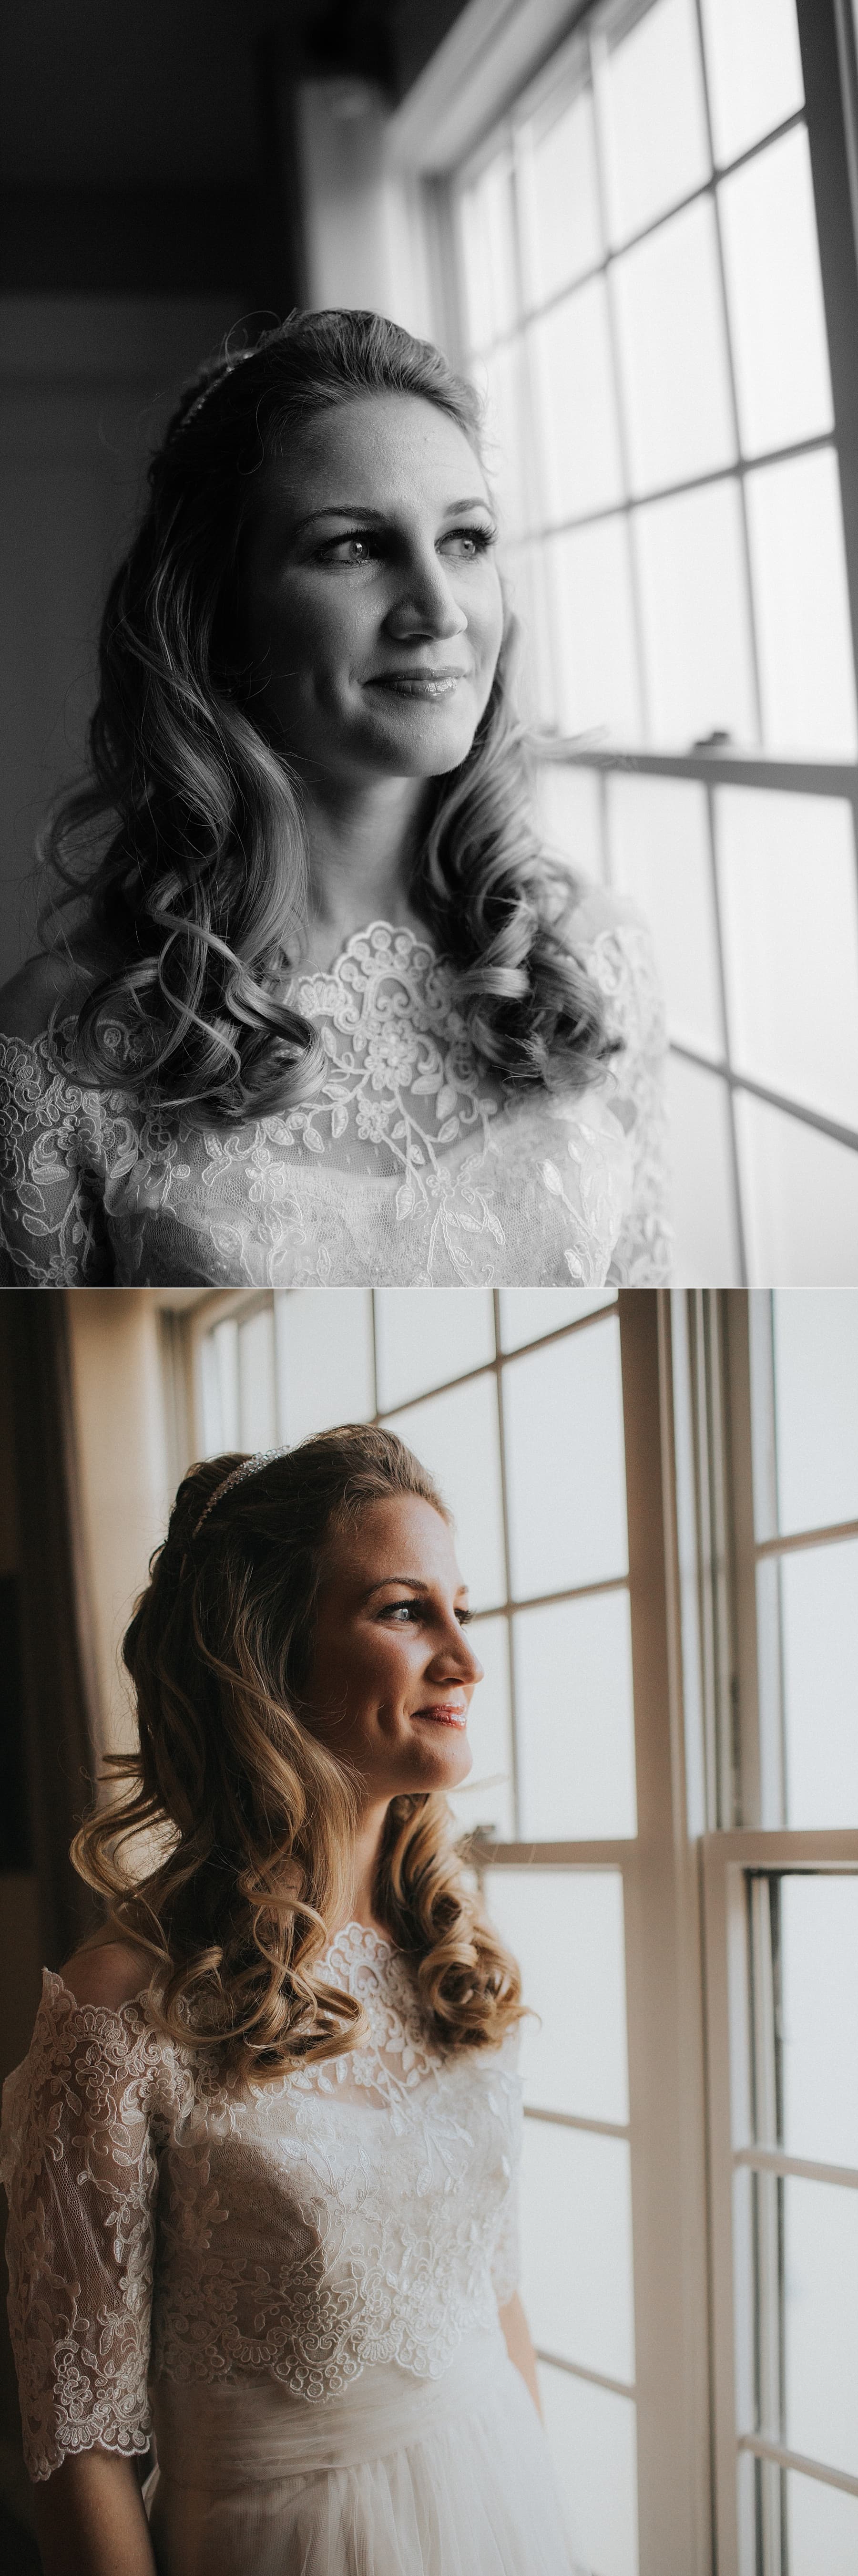 bridal portraits, bride, window